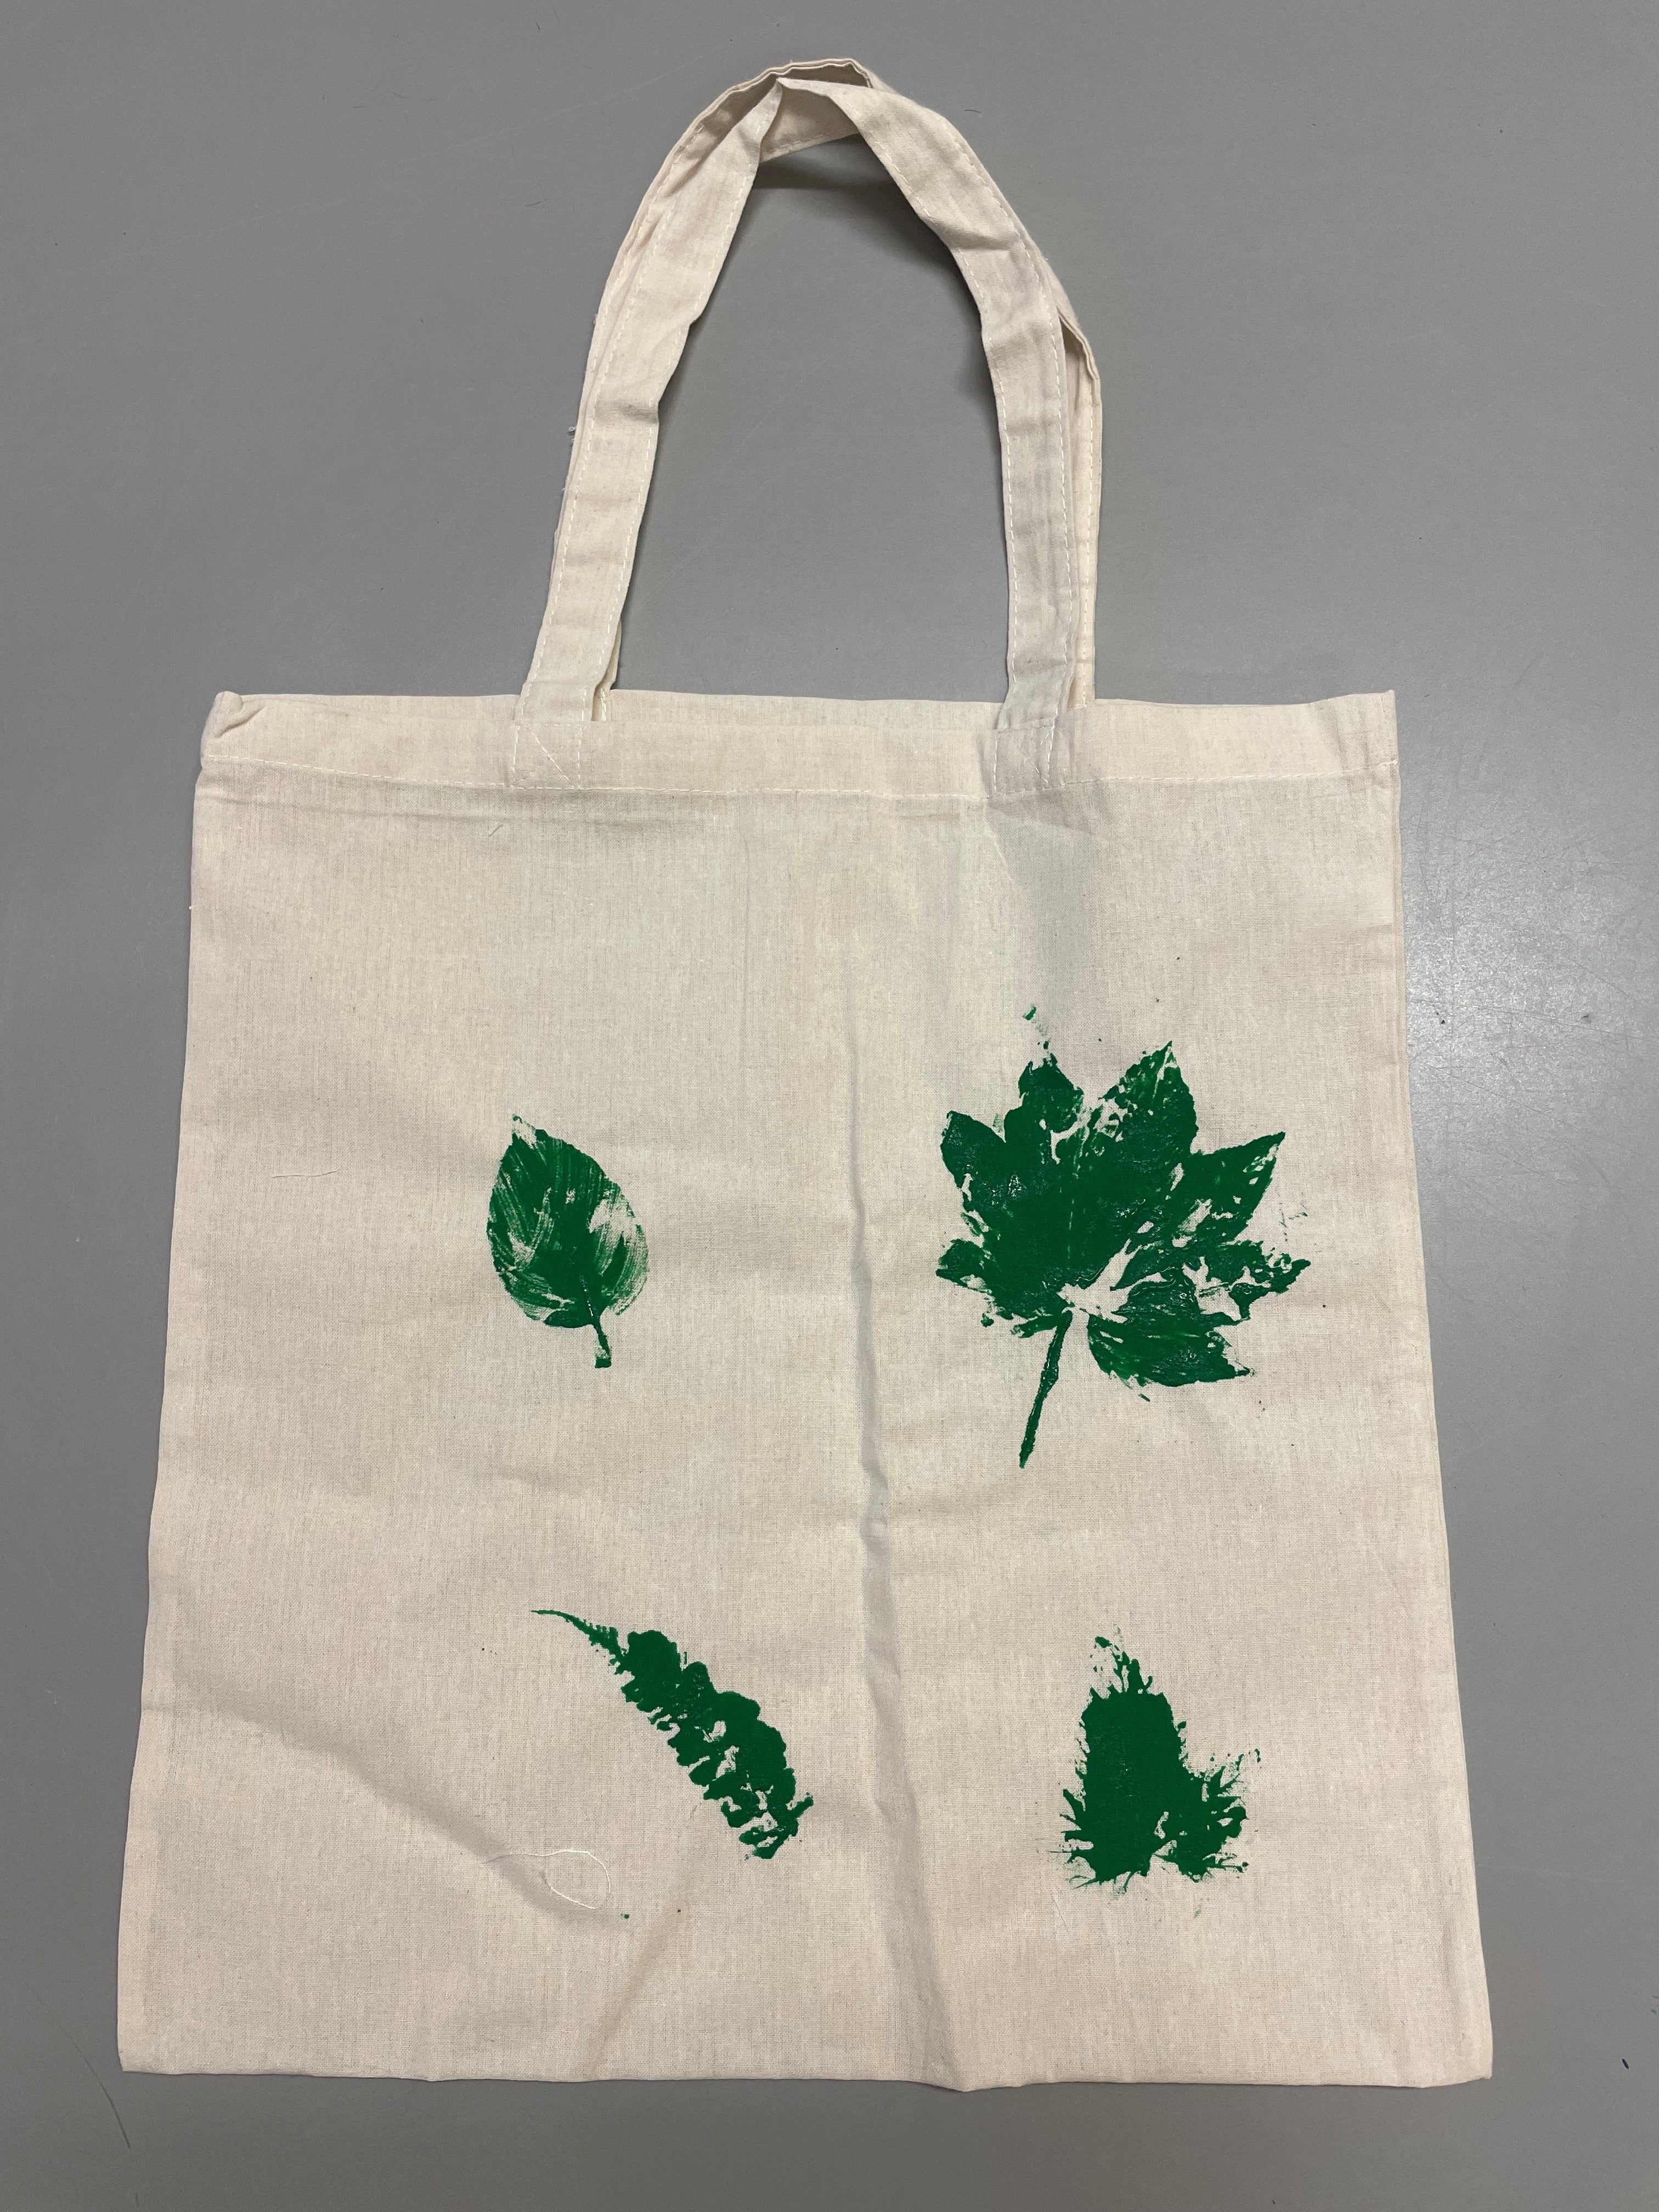 Leaf prints on a canvas bag